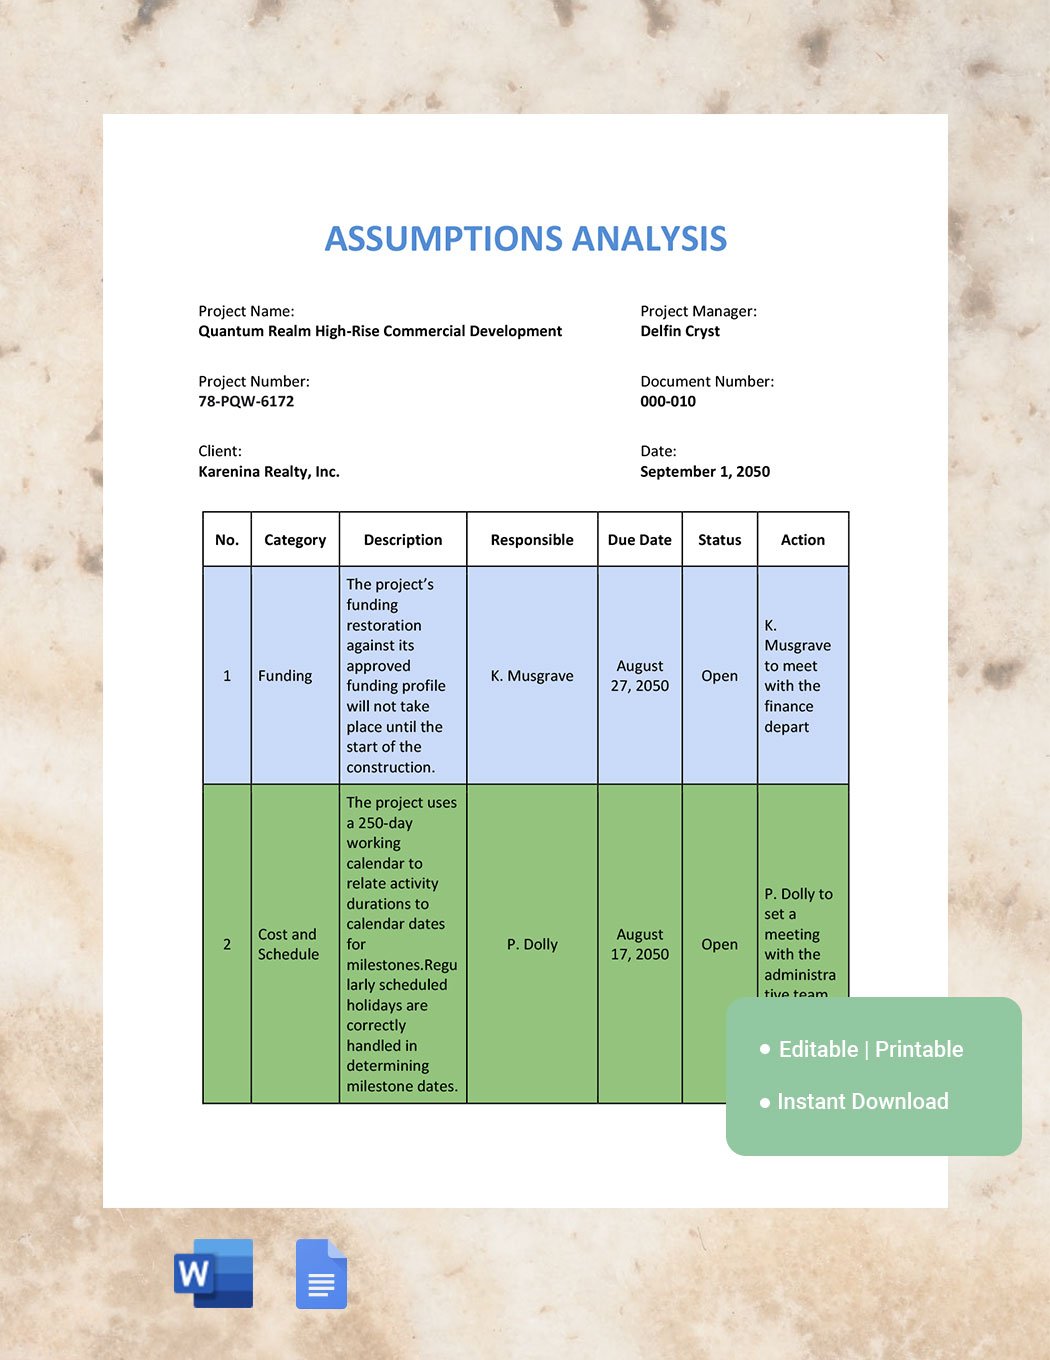 Assumption Analysis Template in Word, Google Docs